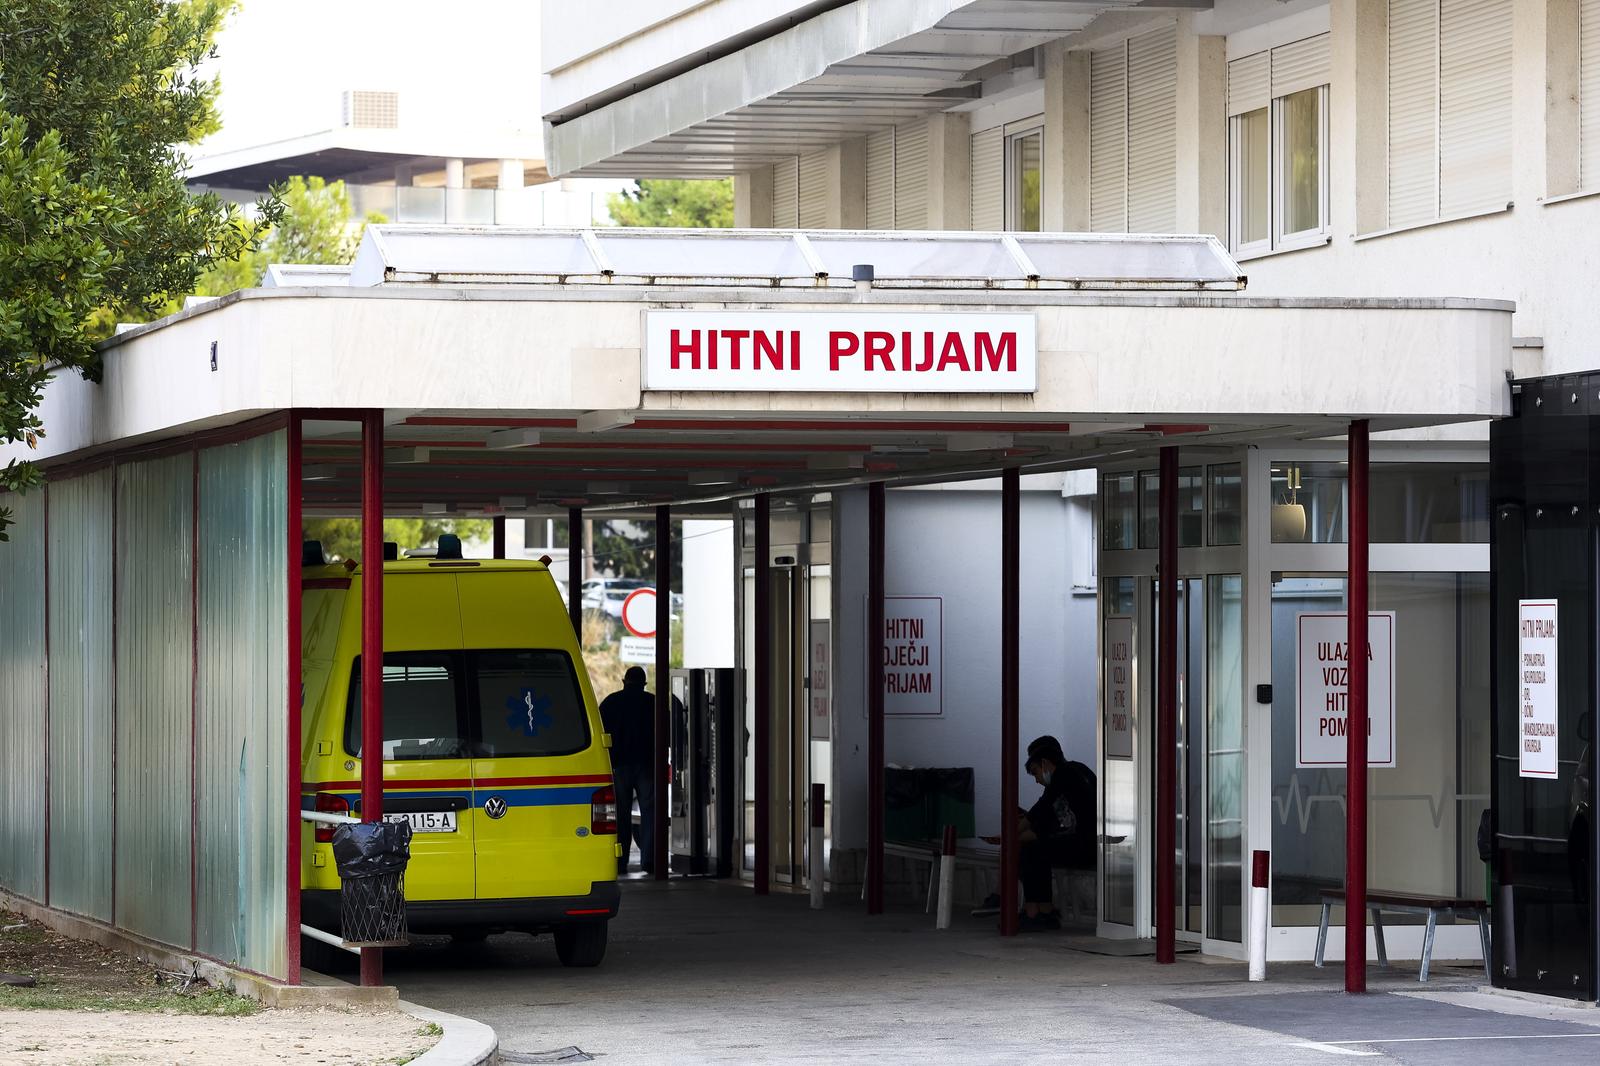 13.10.2022., Split - Klinicki bolnicki centar Split.  Photo: Miroslav Lelas/PIXSELL